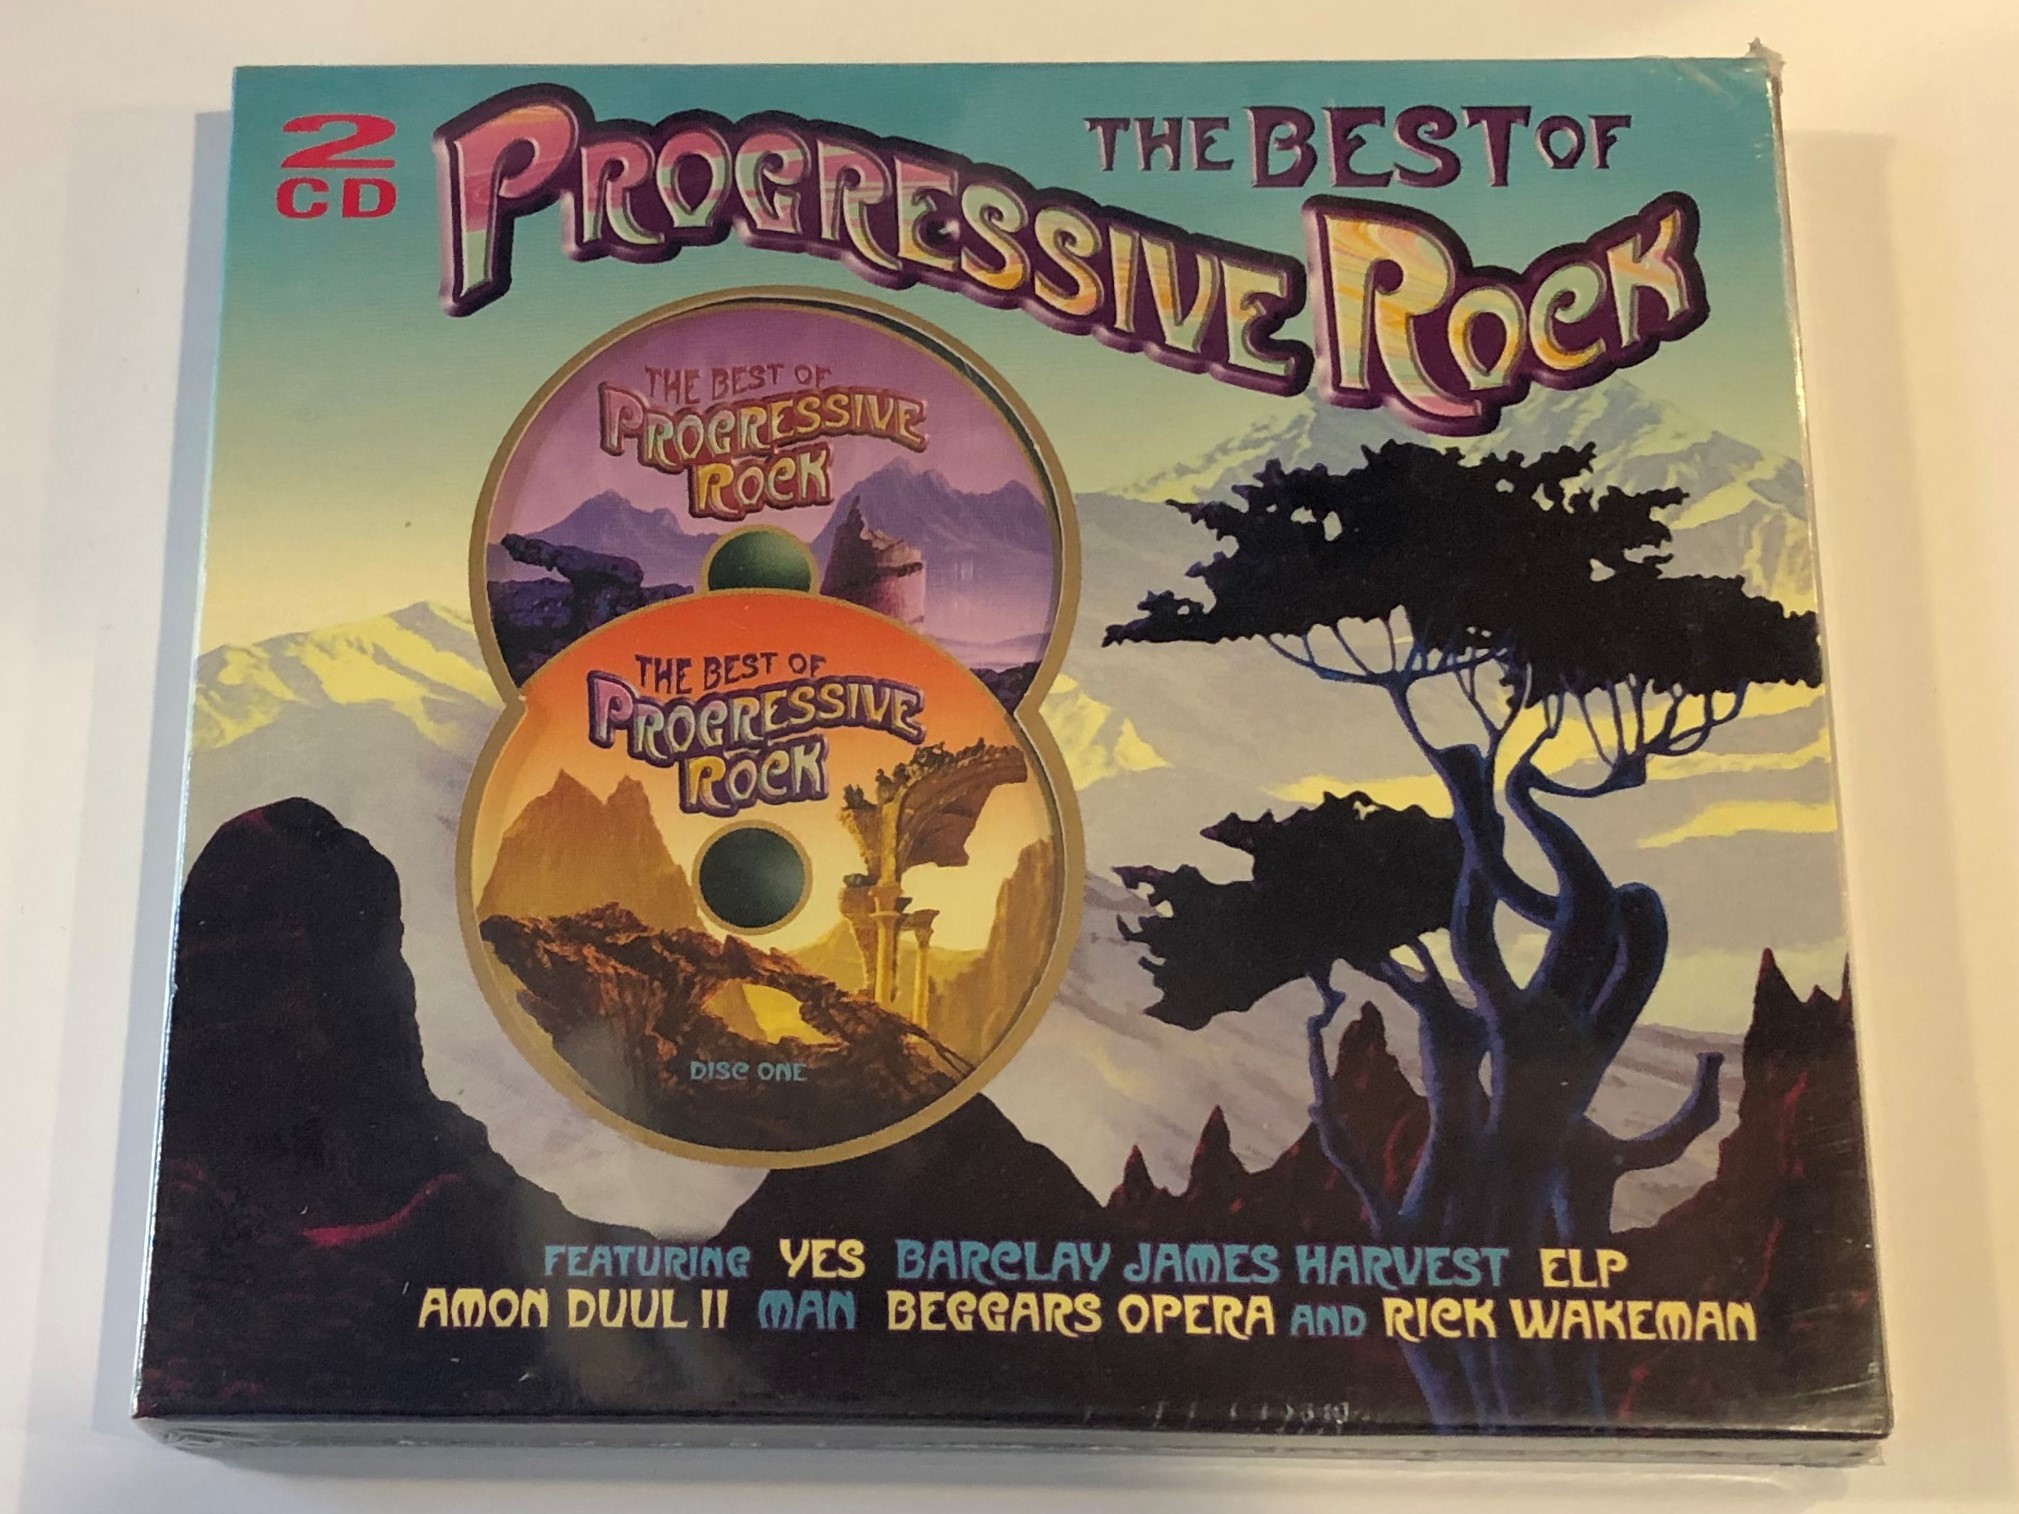 the-best-of-progressive-rock-featuring-yes-barclay-james-harvest-elp-amon-duul-ii-man-beggars-opera-and-rick-wakeman-prism-leisure-2x-audio-cd-2004-platbx-2261-1-.jpg